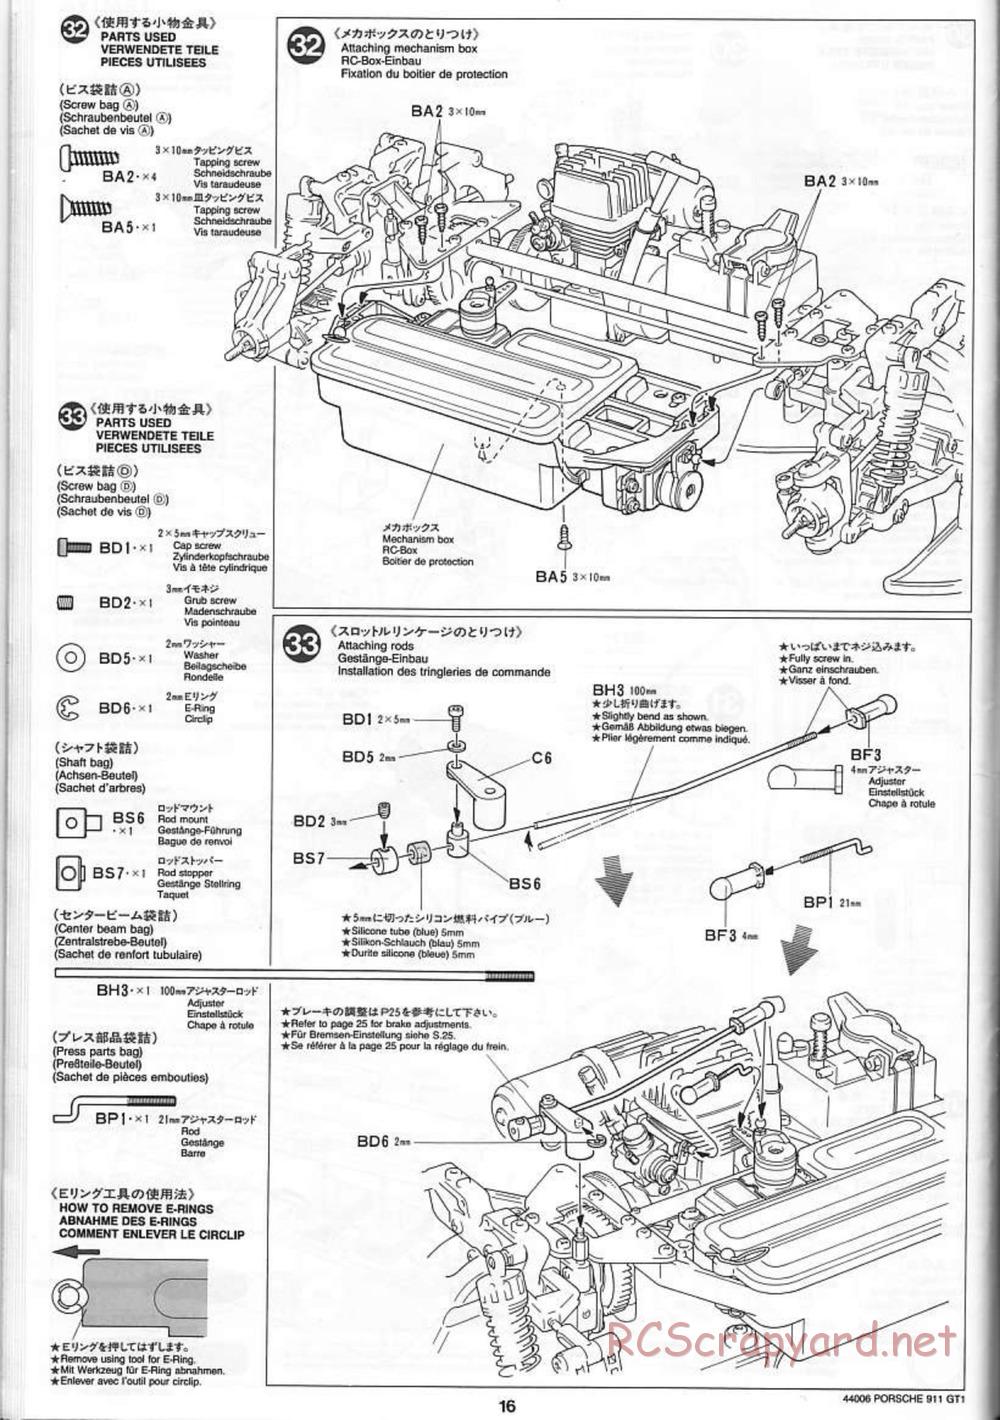 Tamiya - Porsche 911 GT1 - TGX Mk.1 Chassis - Manual - Page 16